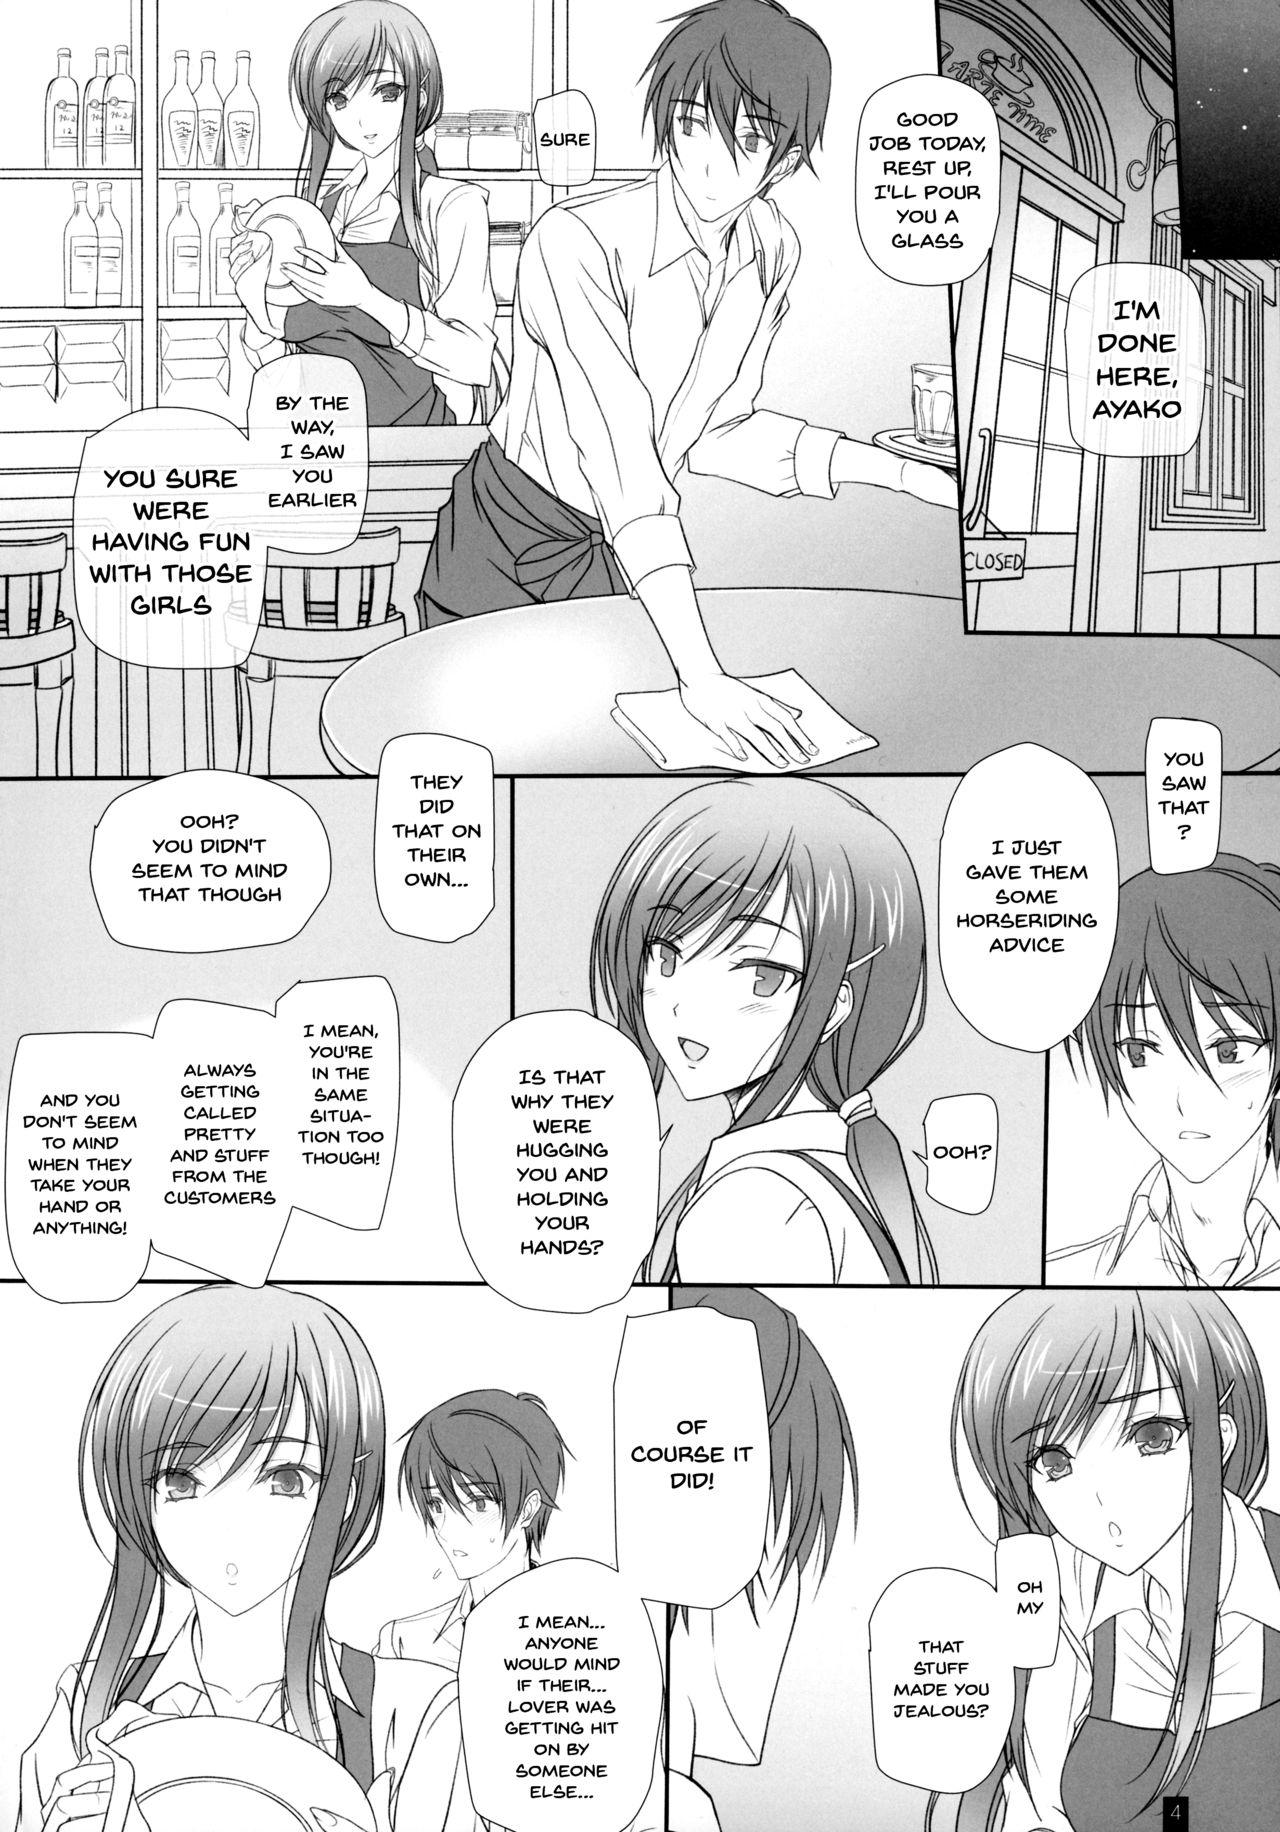 Trans Oh! Ayako! More!&More!! - Walkure romanze Cocks - Page 3